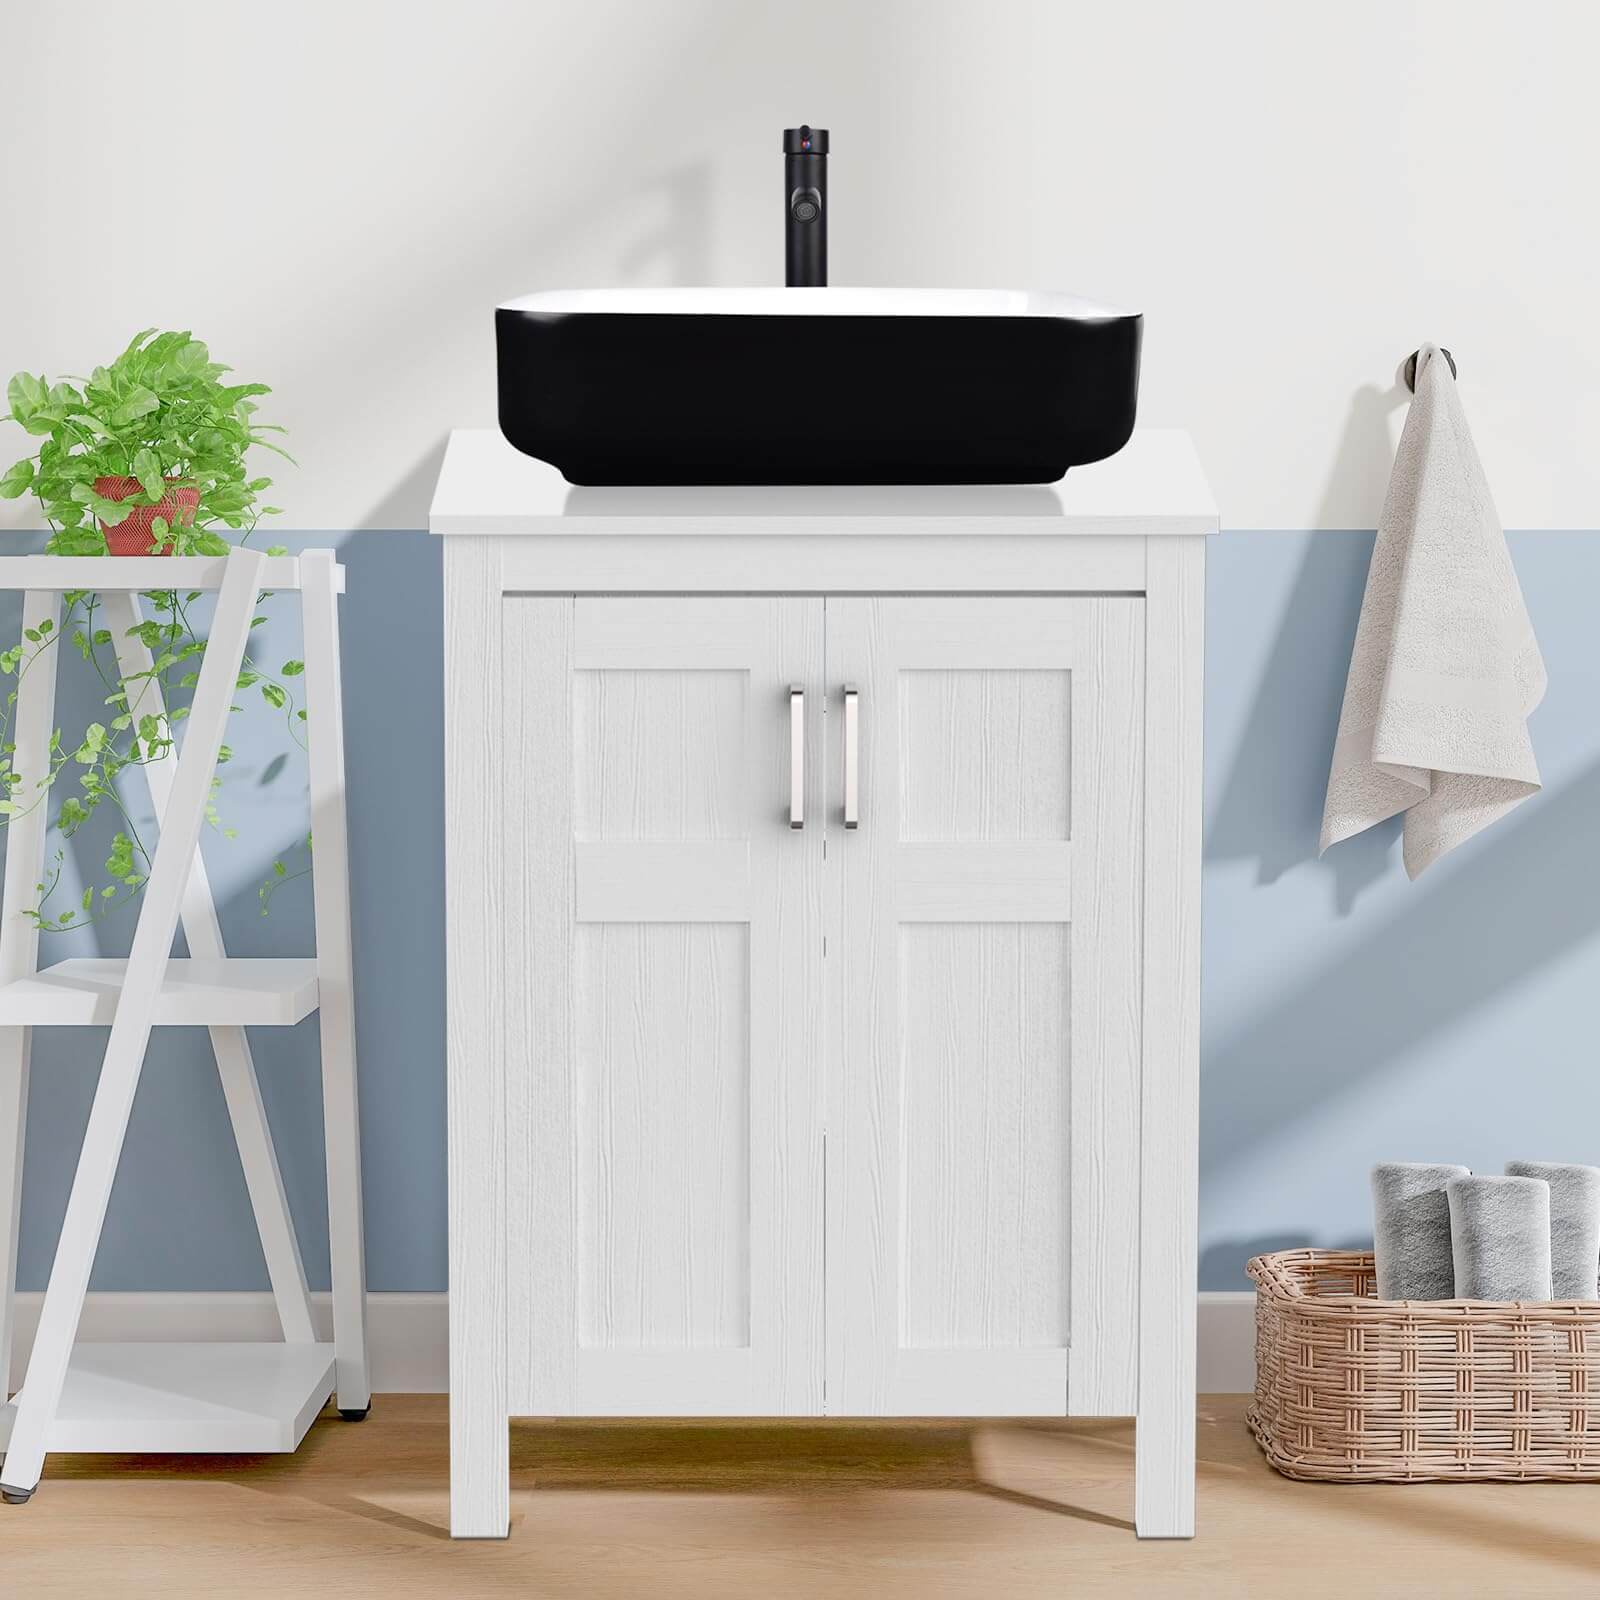 Elecwish White Bathroom Vanity and Black Ceramic Sink Set HW1120-WH display scene